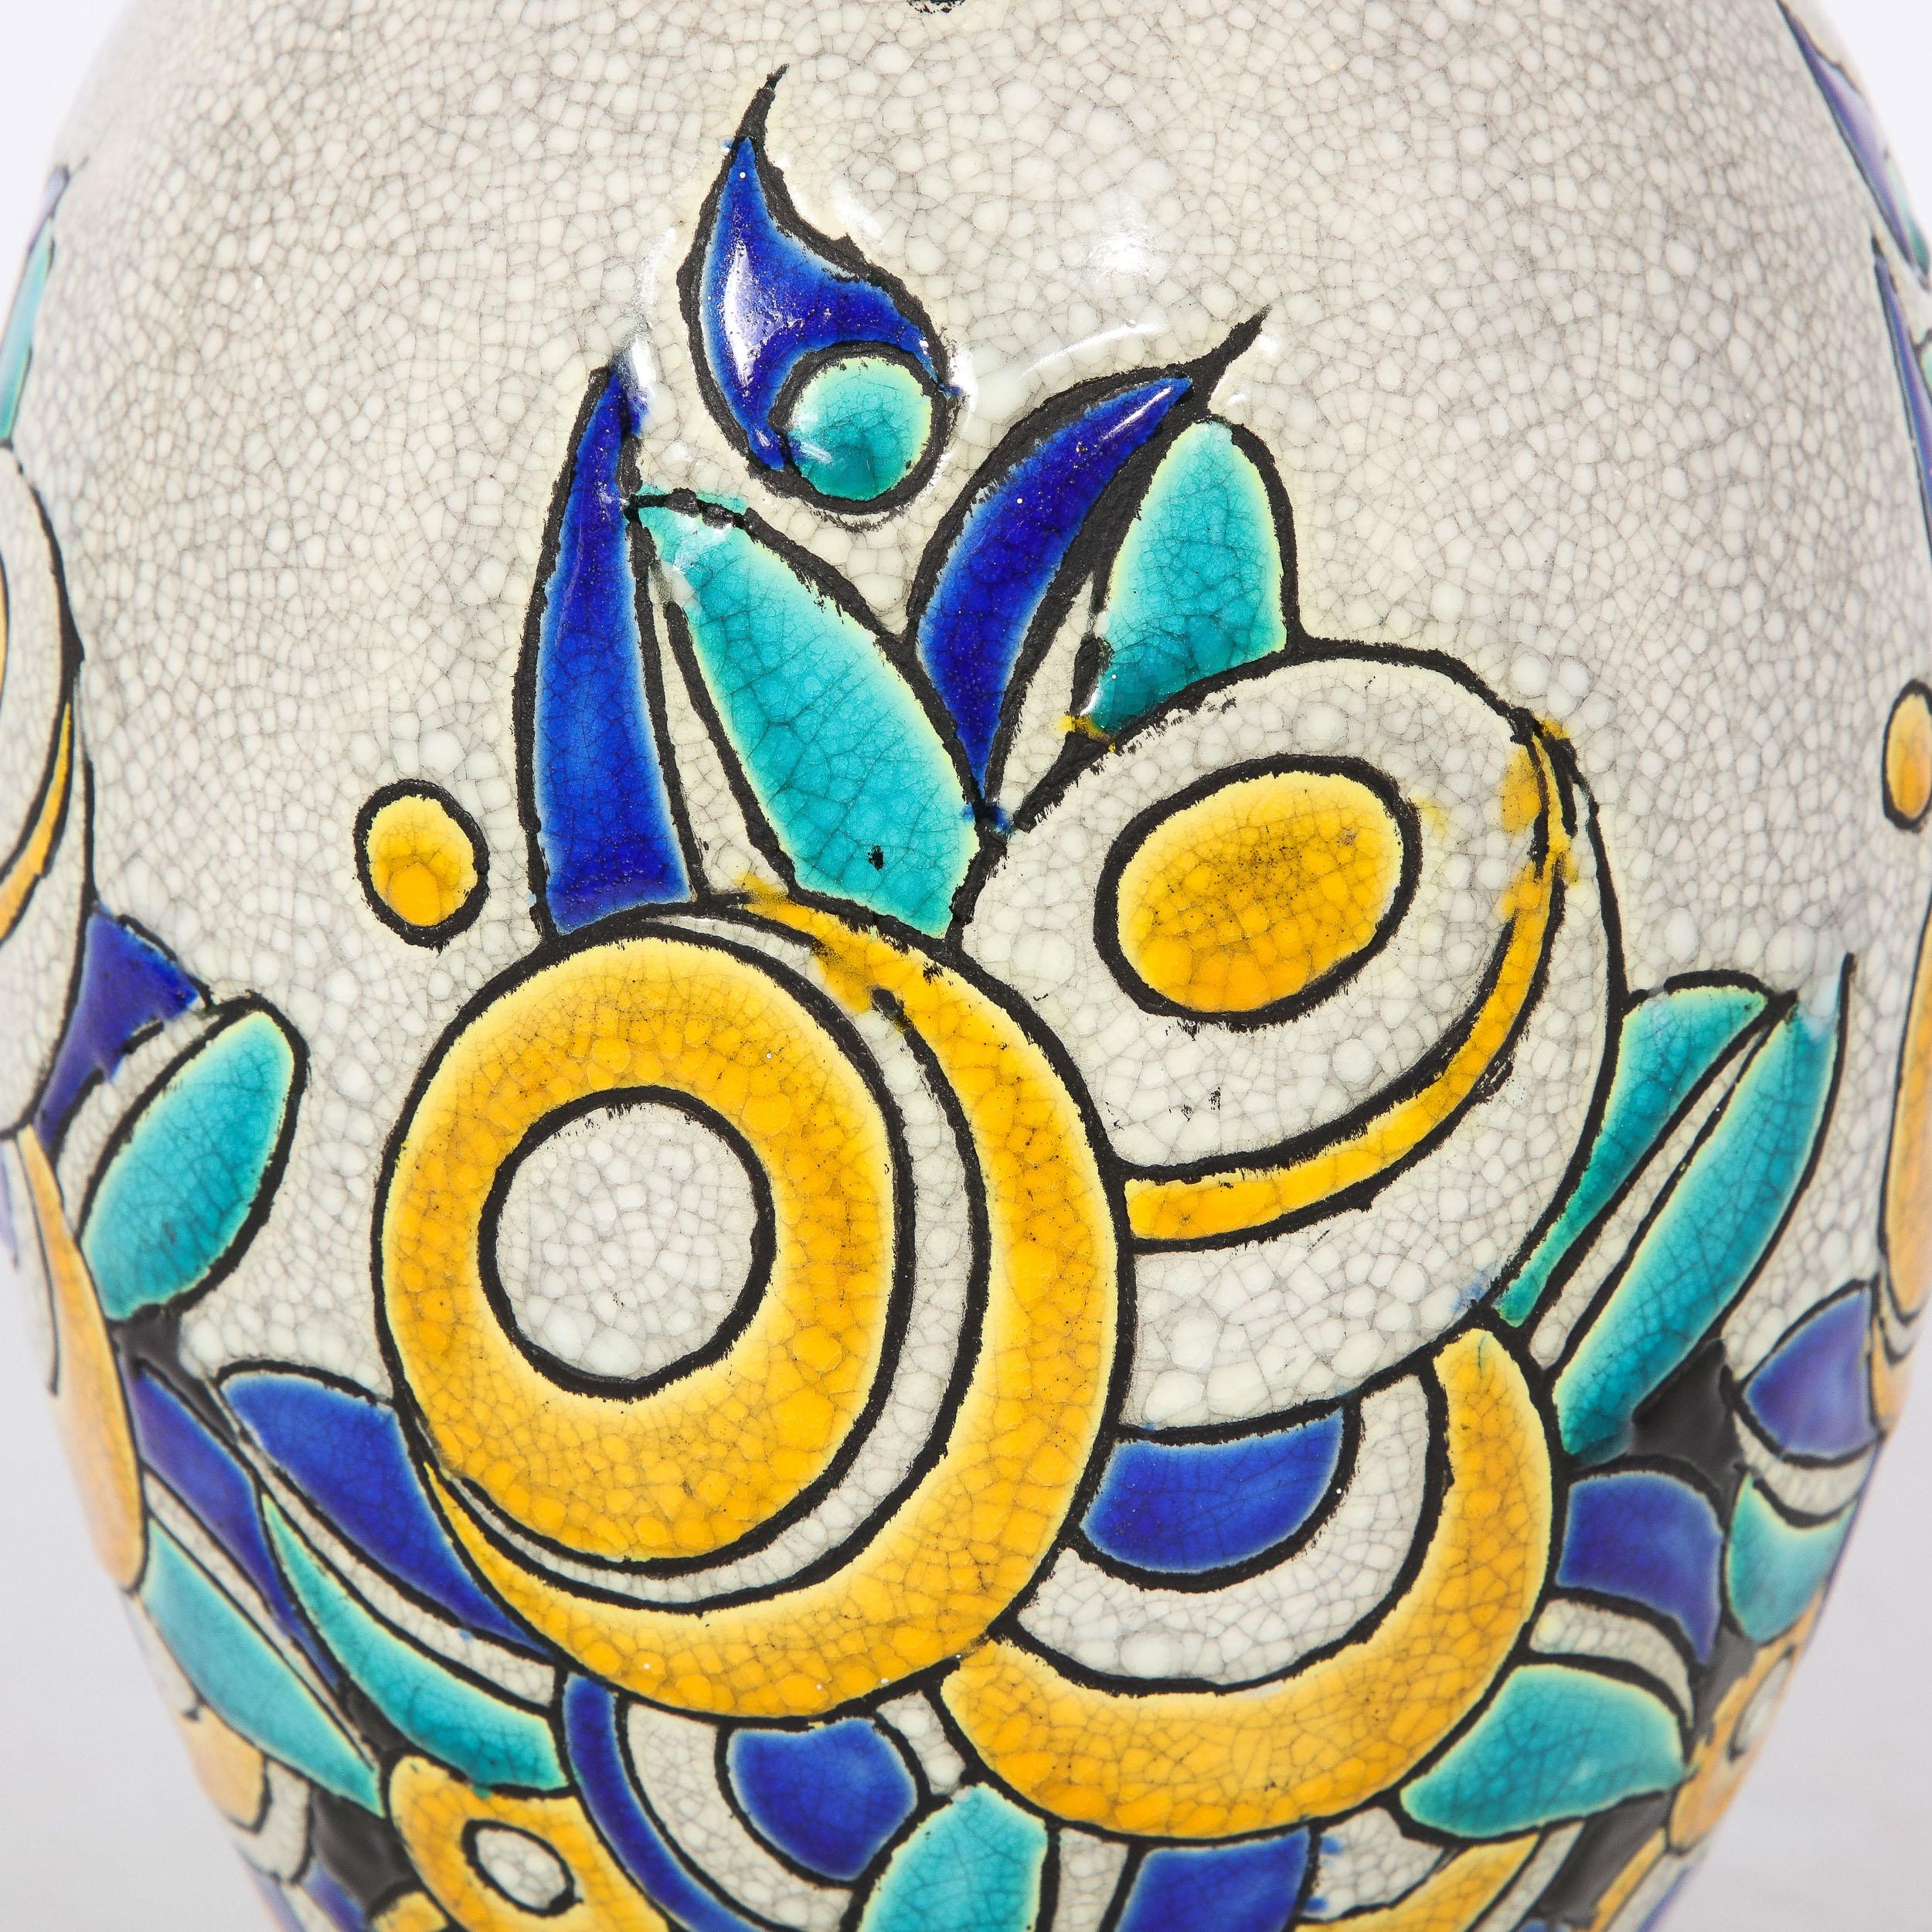 Belgian Art Deco Cubic Floral Ceramic Vase by Charles Catteau for Boch Freres Keramis For Sale